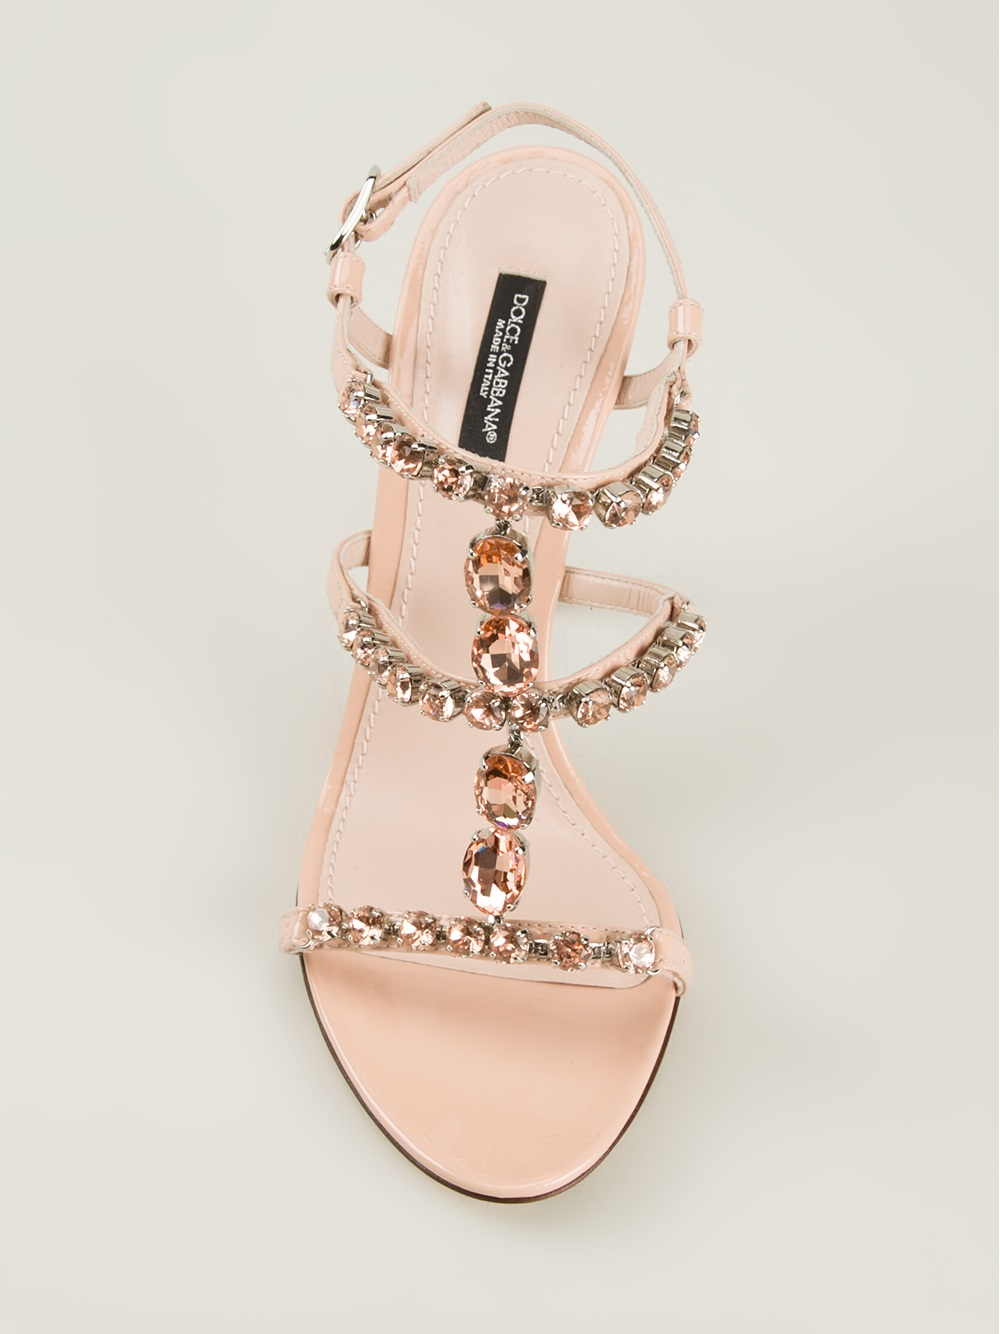 Dolce & Gabbana Embellished Sandals in Metallic (Pink) - Lyst